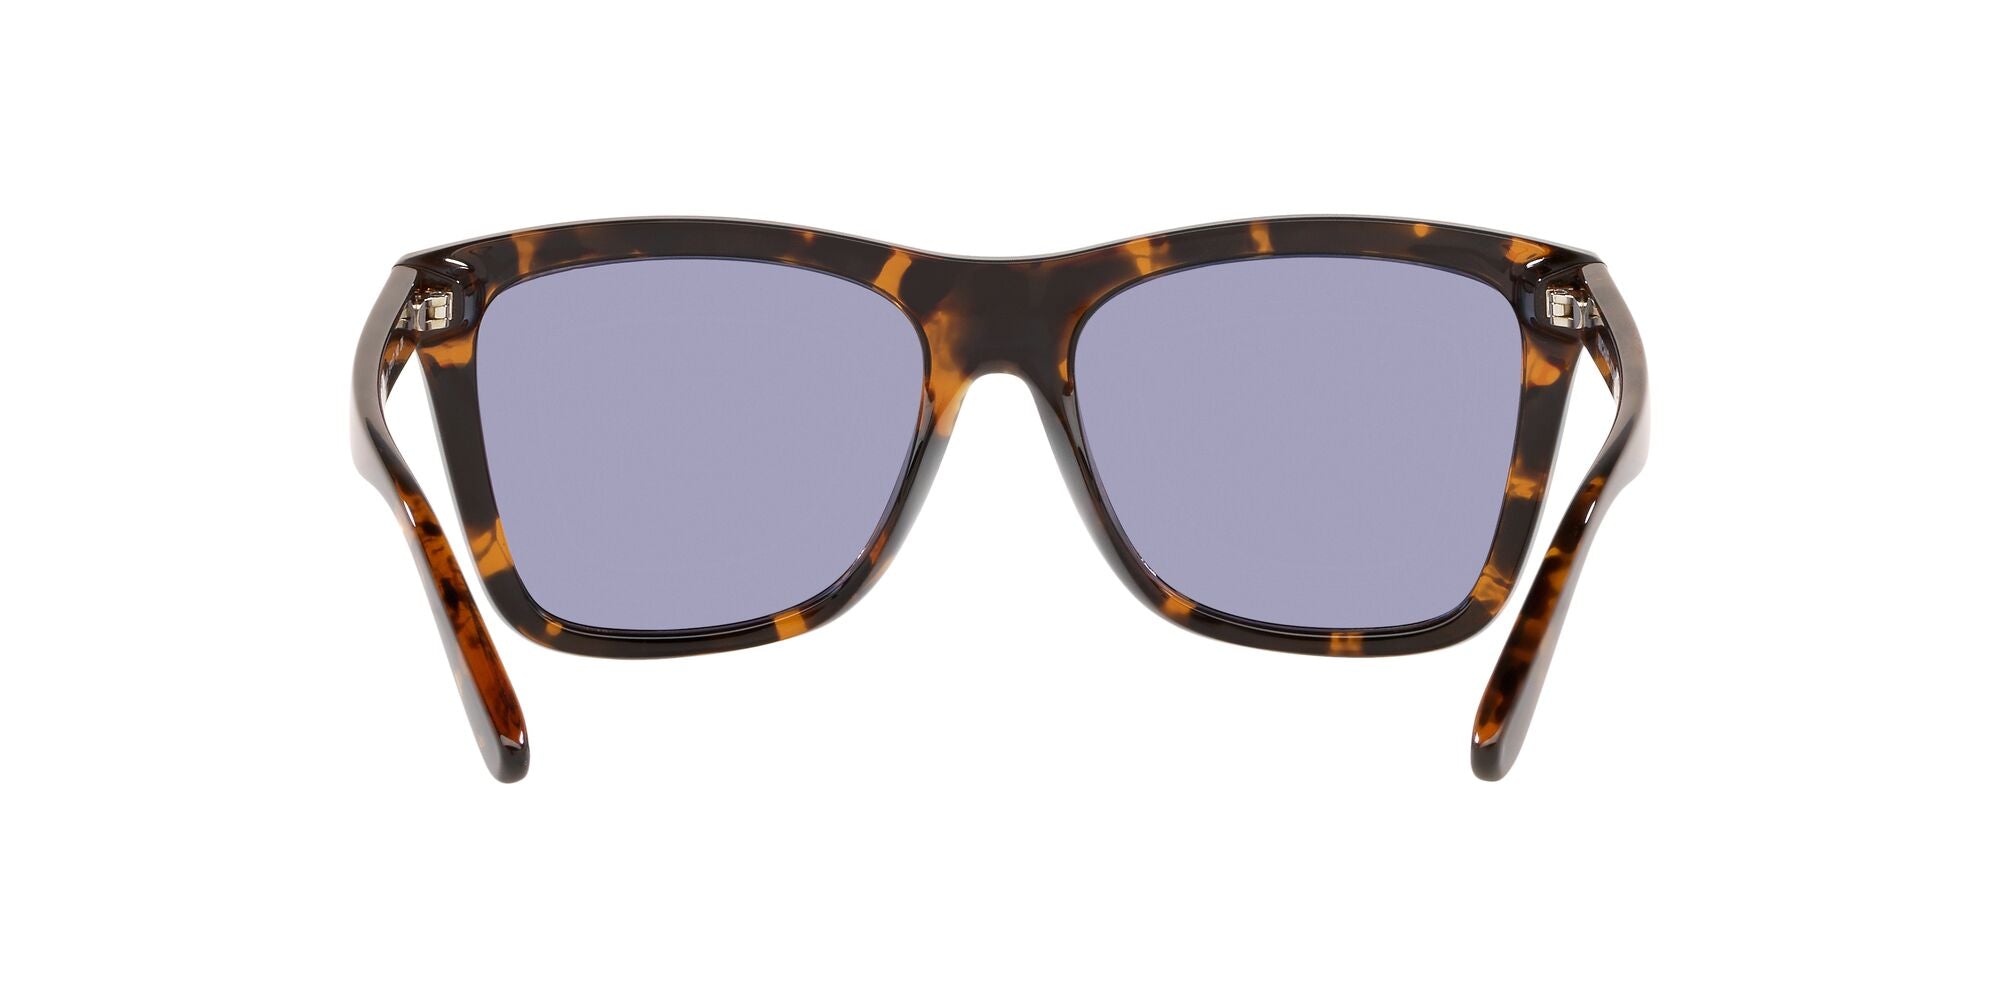 Michael Kors Womens Montauk Dark Tortoise/Lilac Mirror Non-Polarized Sunglasses